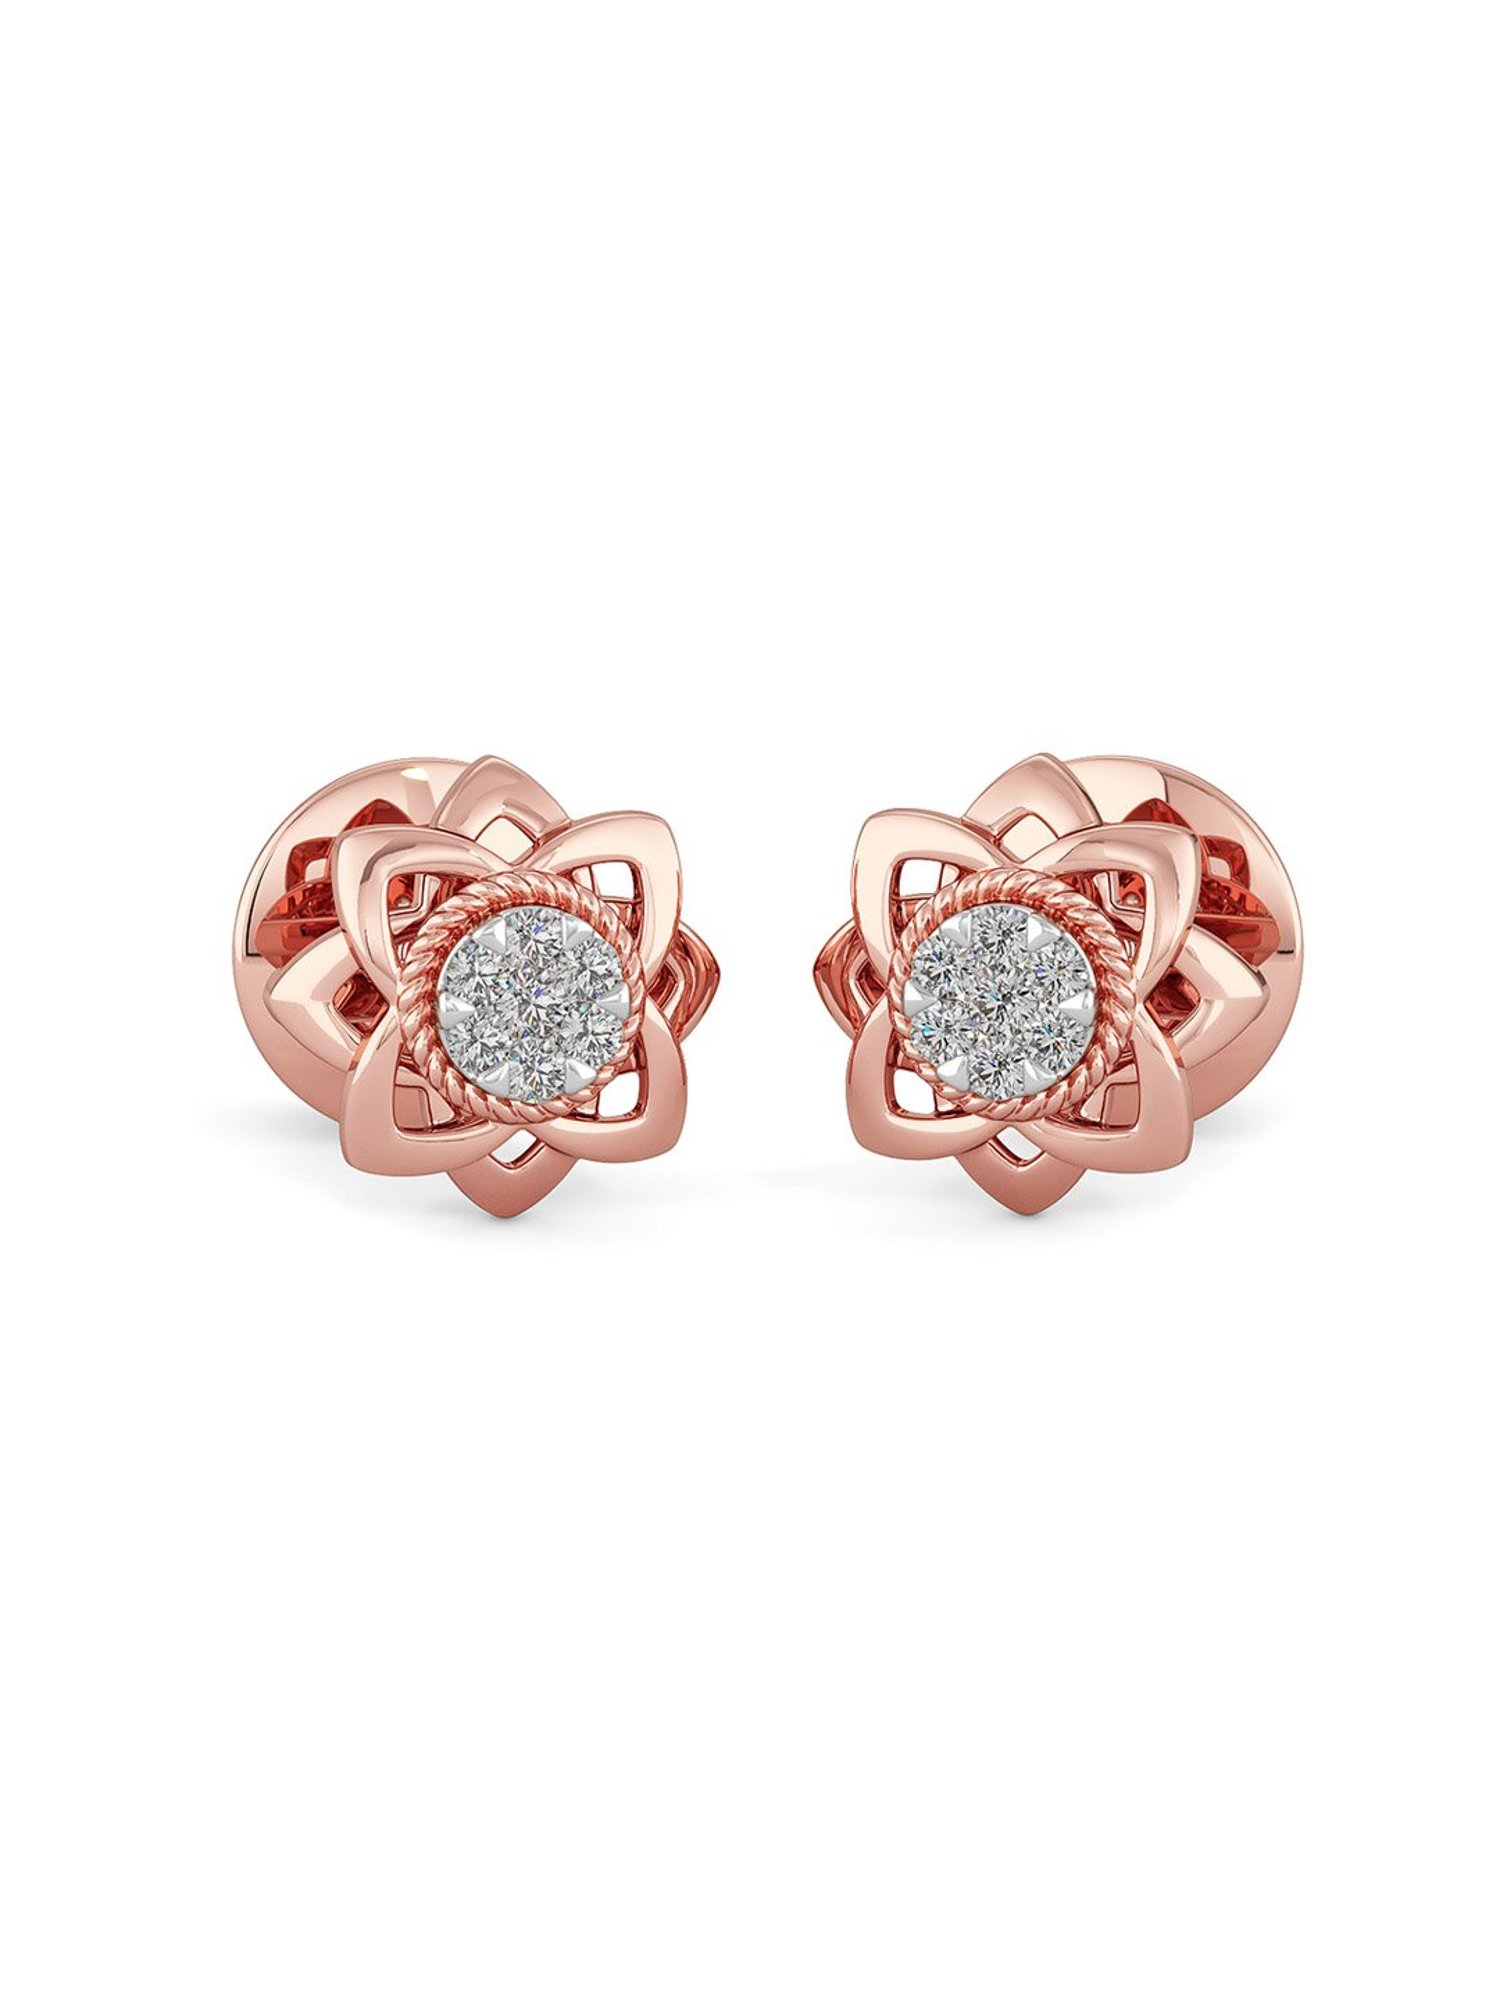 Lovely Solitaire Diamond Stud Earrings in Rose Gold